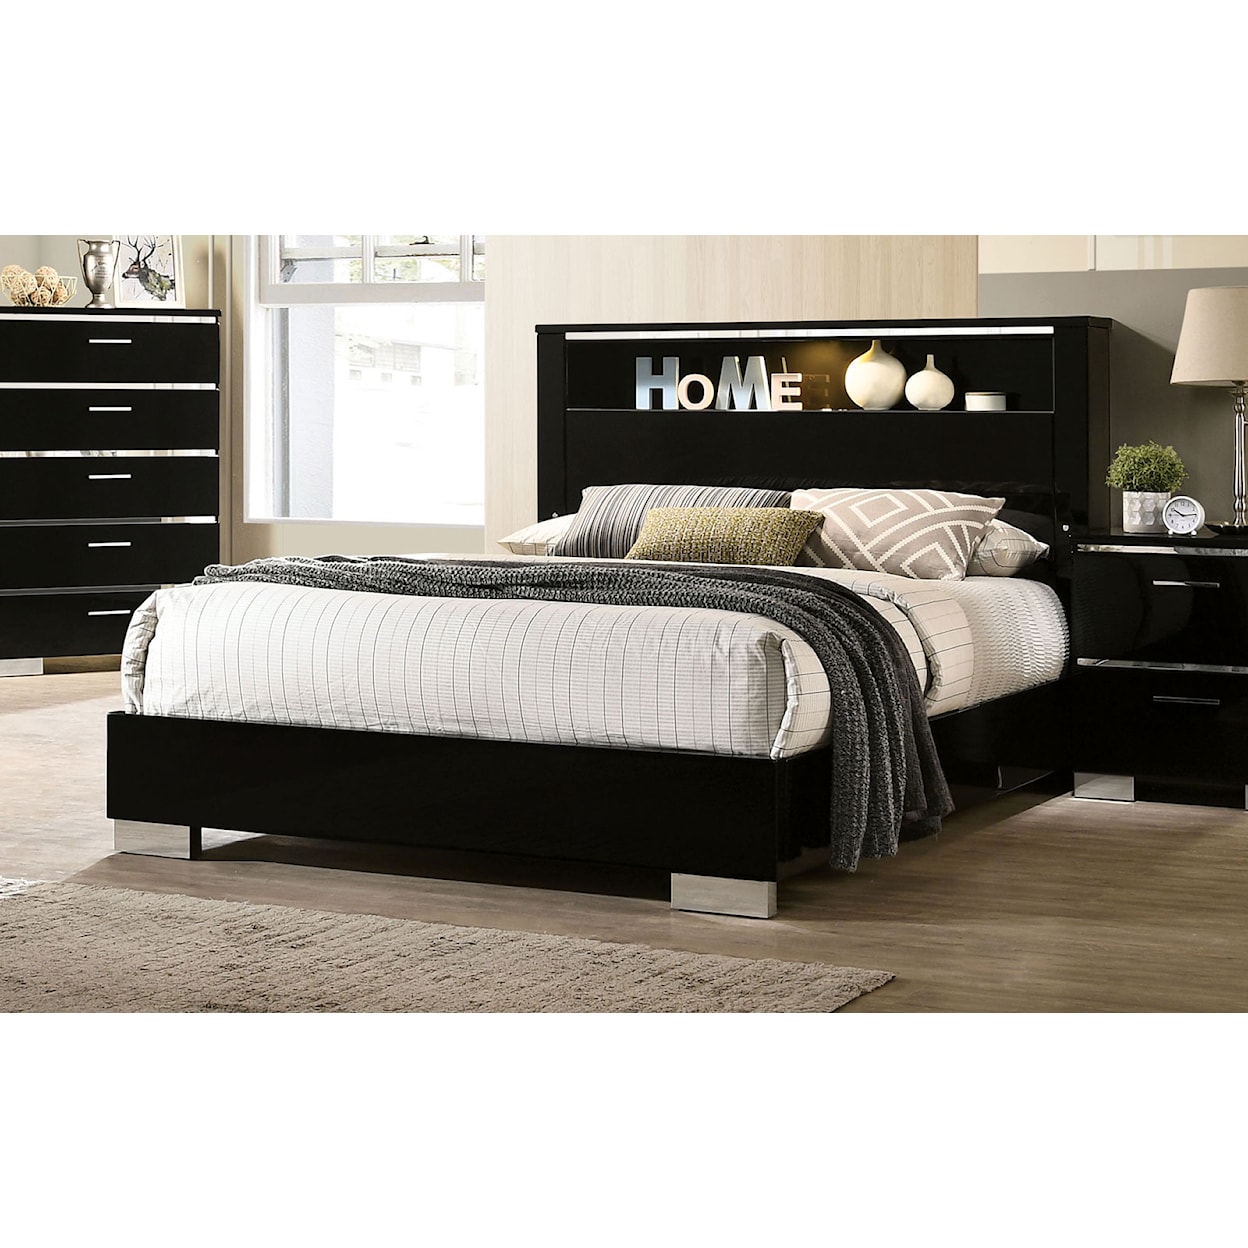 Furniture of America Carlie King Bed